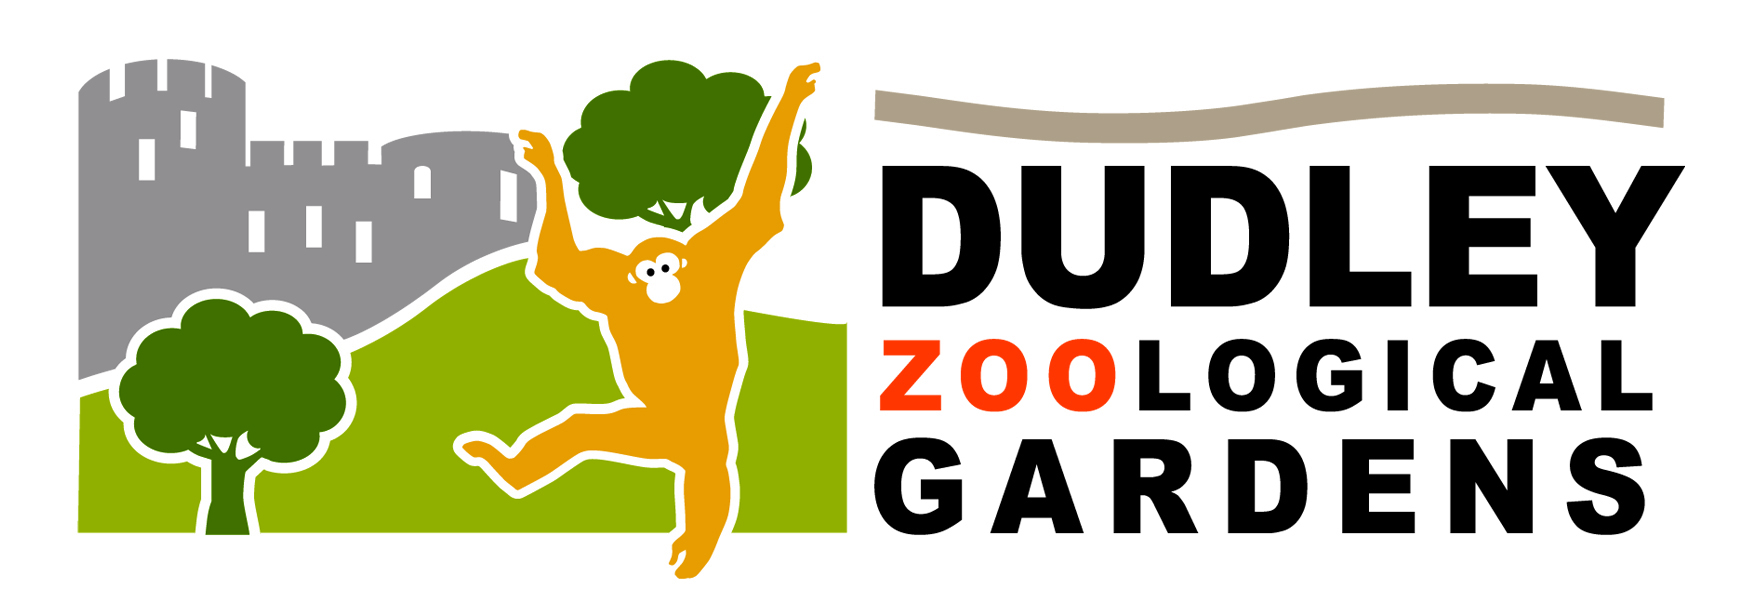 Dudley Zoo logo